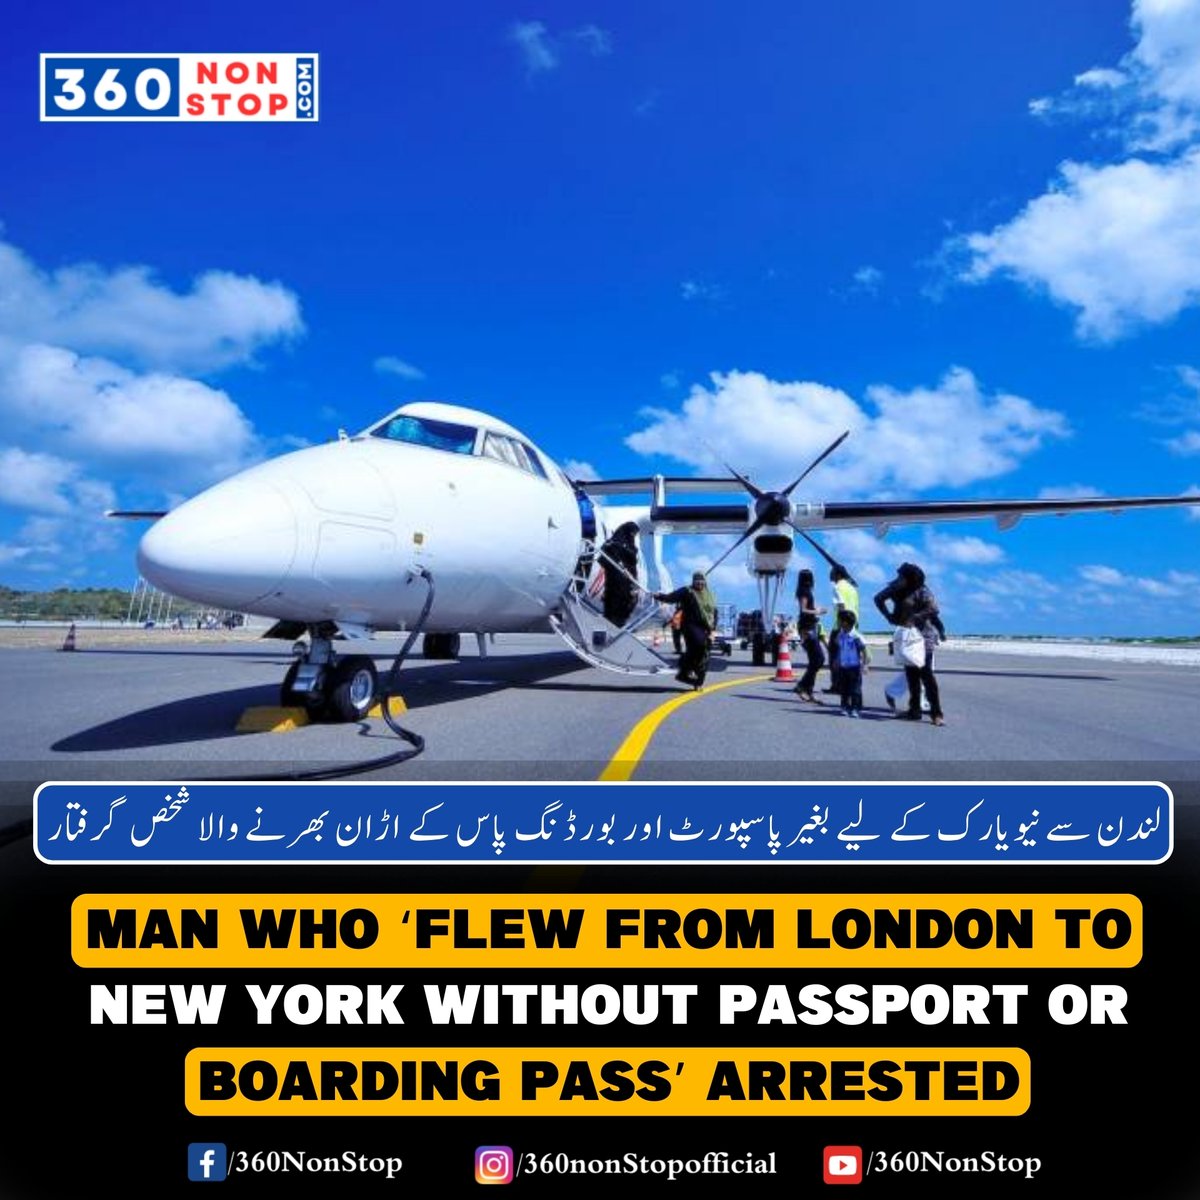 🌟 Travel Alert: لندن سے نیویارک کے لیے بغیر پاسپورٹ اور بورڈنگ پاس کے اڑان بھرنے والا شخص گرفتار. 📱 Follow us on Instagram: [shorturl.at/zKORU] 🌐 Join Our Facebook Group: [shorturl.at/mqy14] #TravelAlert #LondonToNewYork #FlightIncident #360NonStop